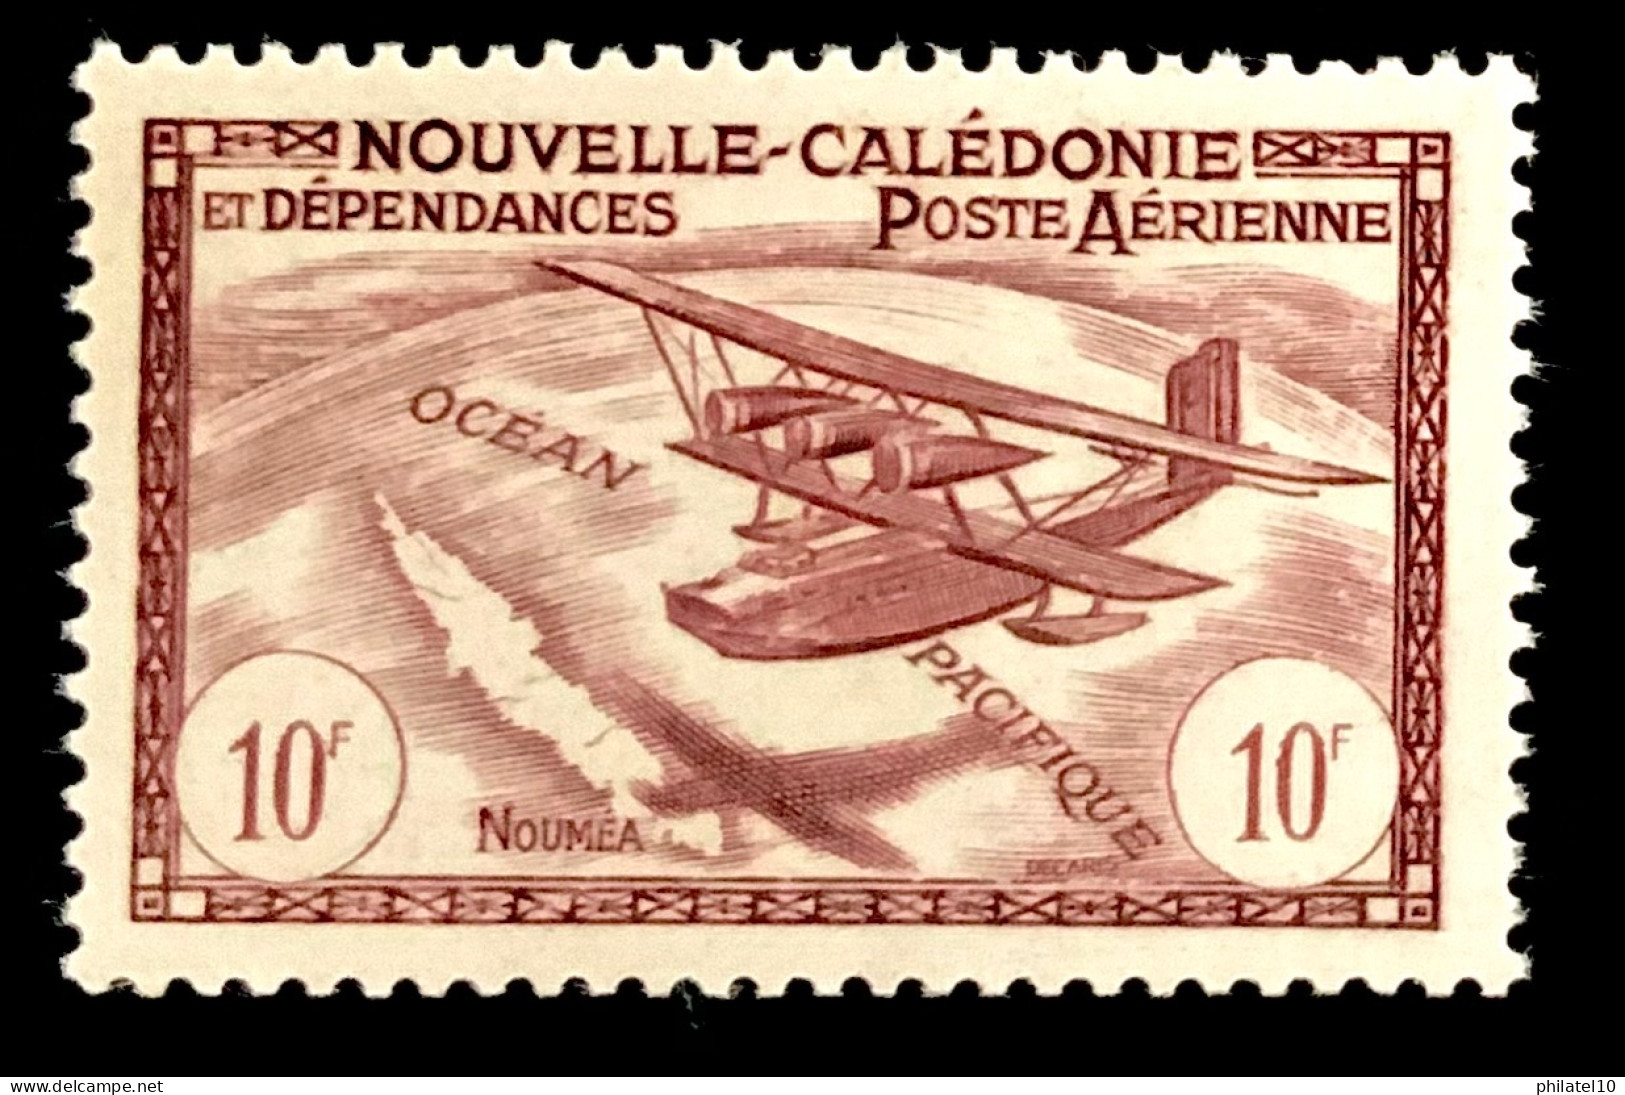 1943 NOUVELLE CALEDONIE - POSTE AERIENNE 10F - NEUF** - Nuevos